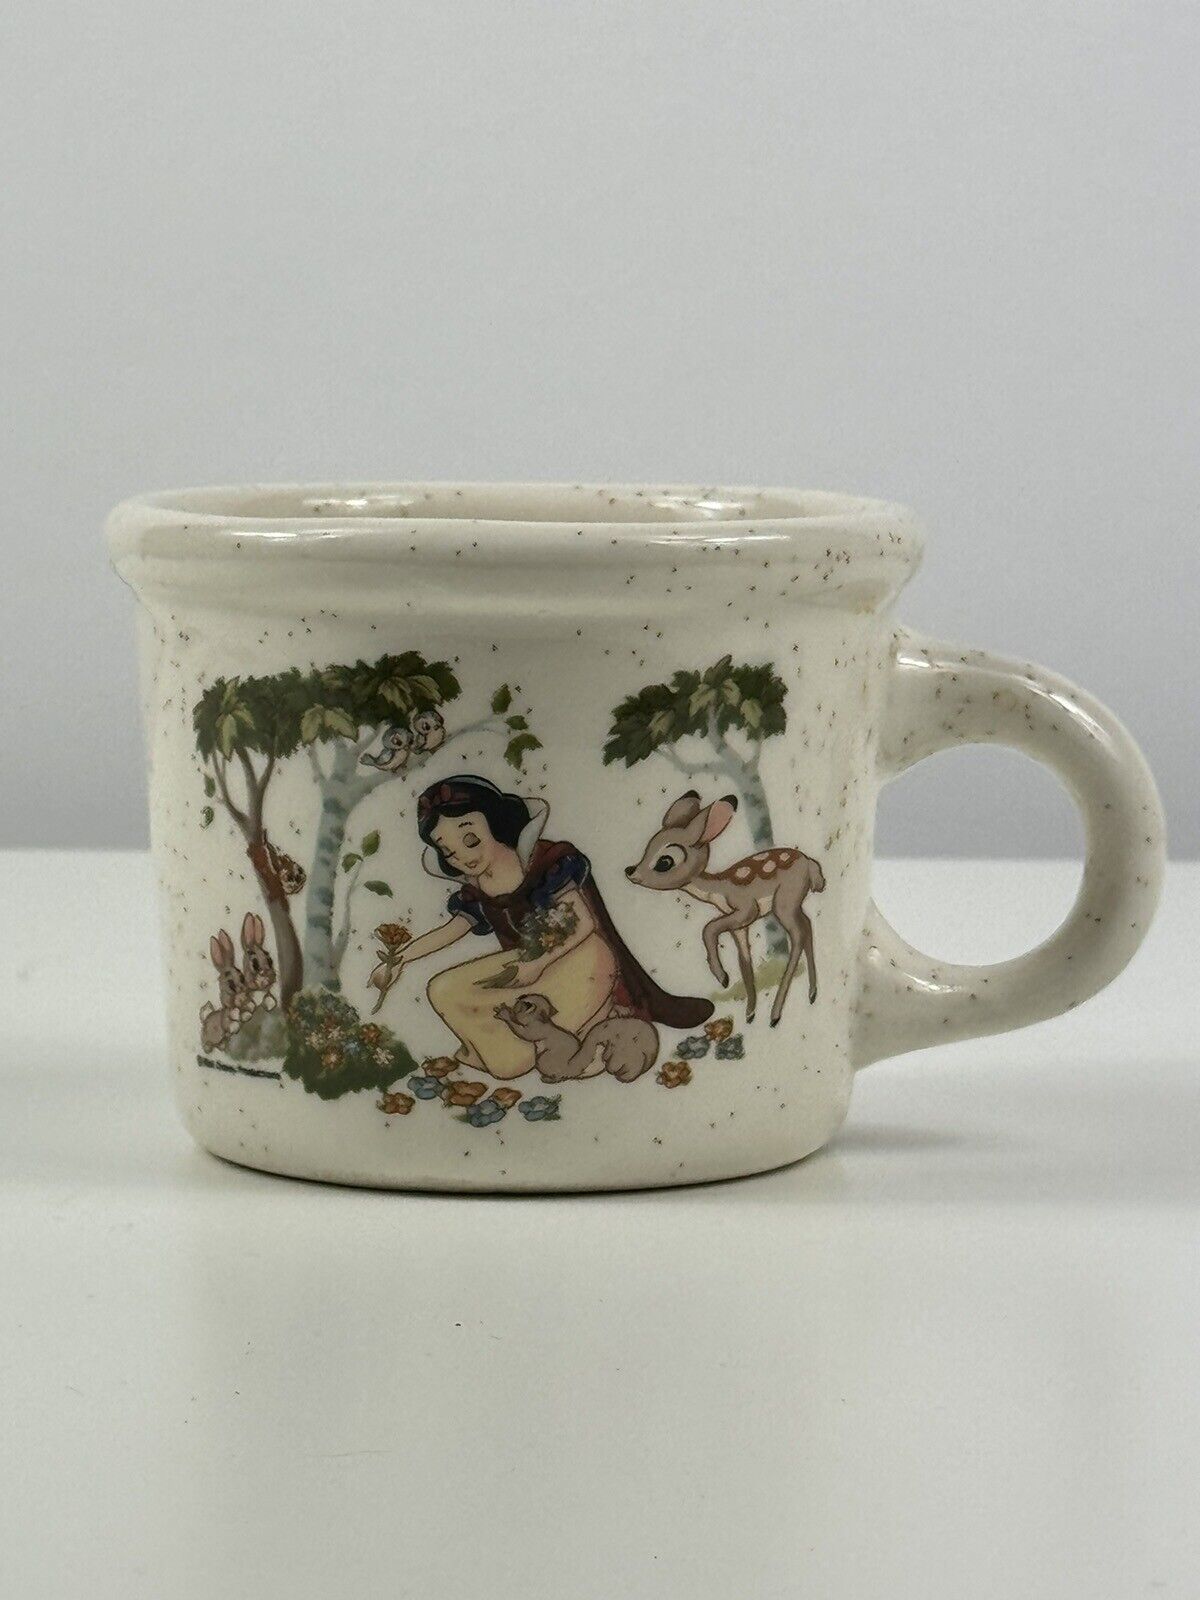 Vintage DISNEY Treasure Craft Snow White Speckled Ceramic Mug, Made in USA, #851